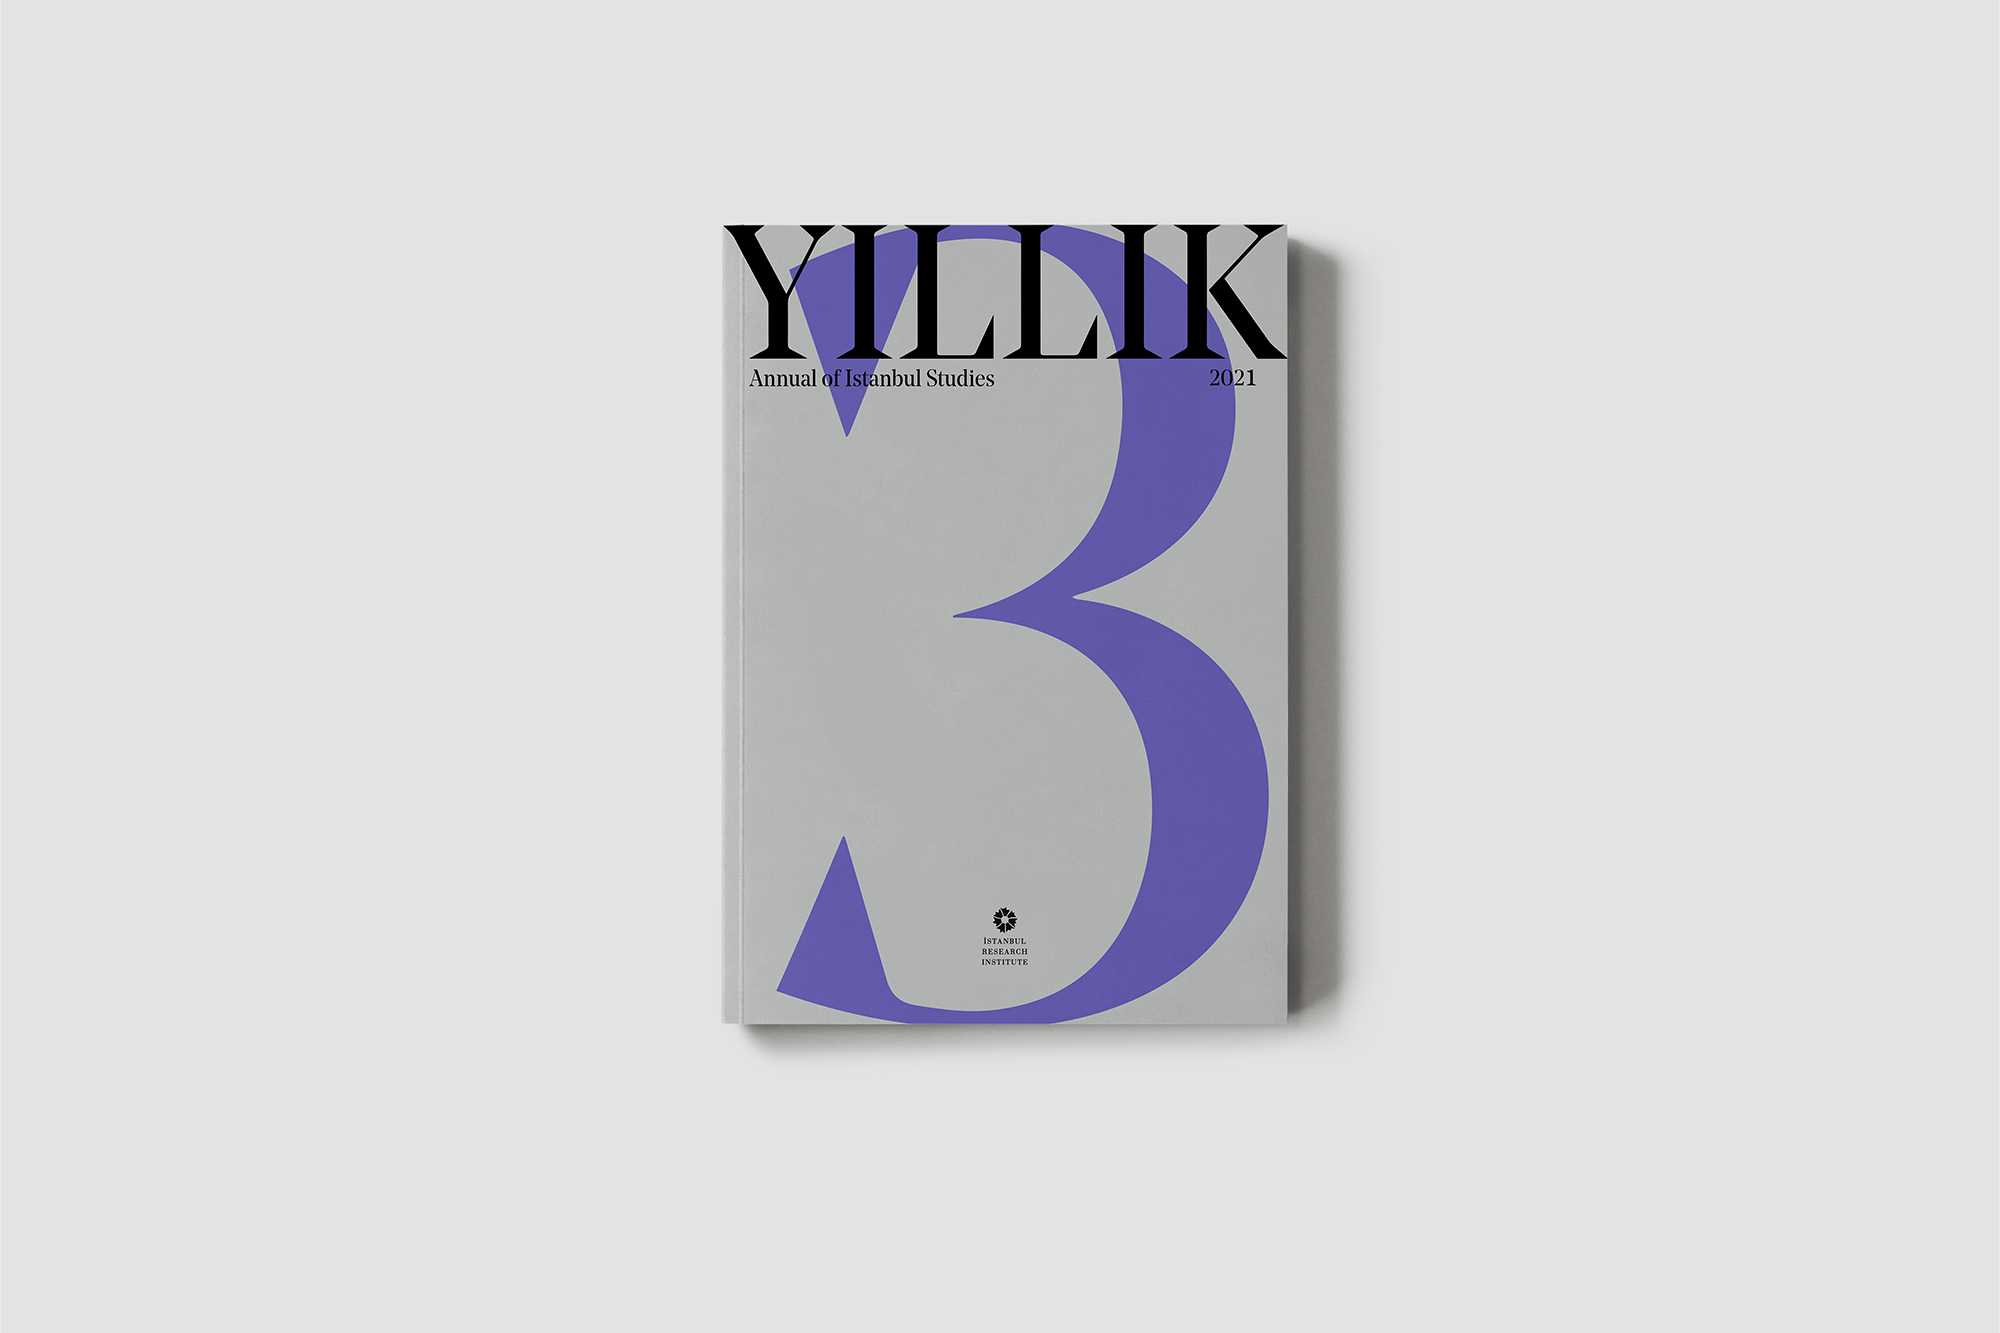 YILLIK3